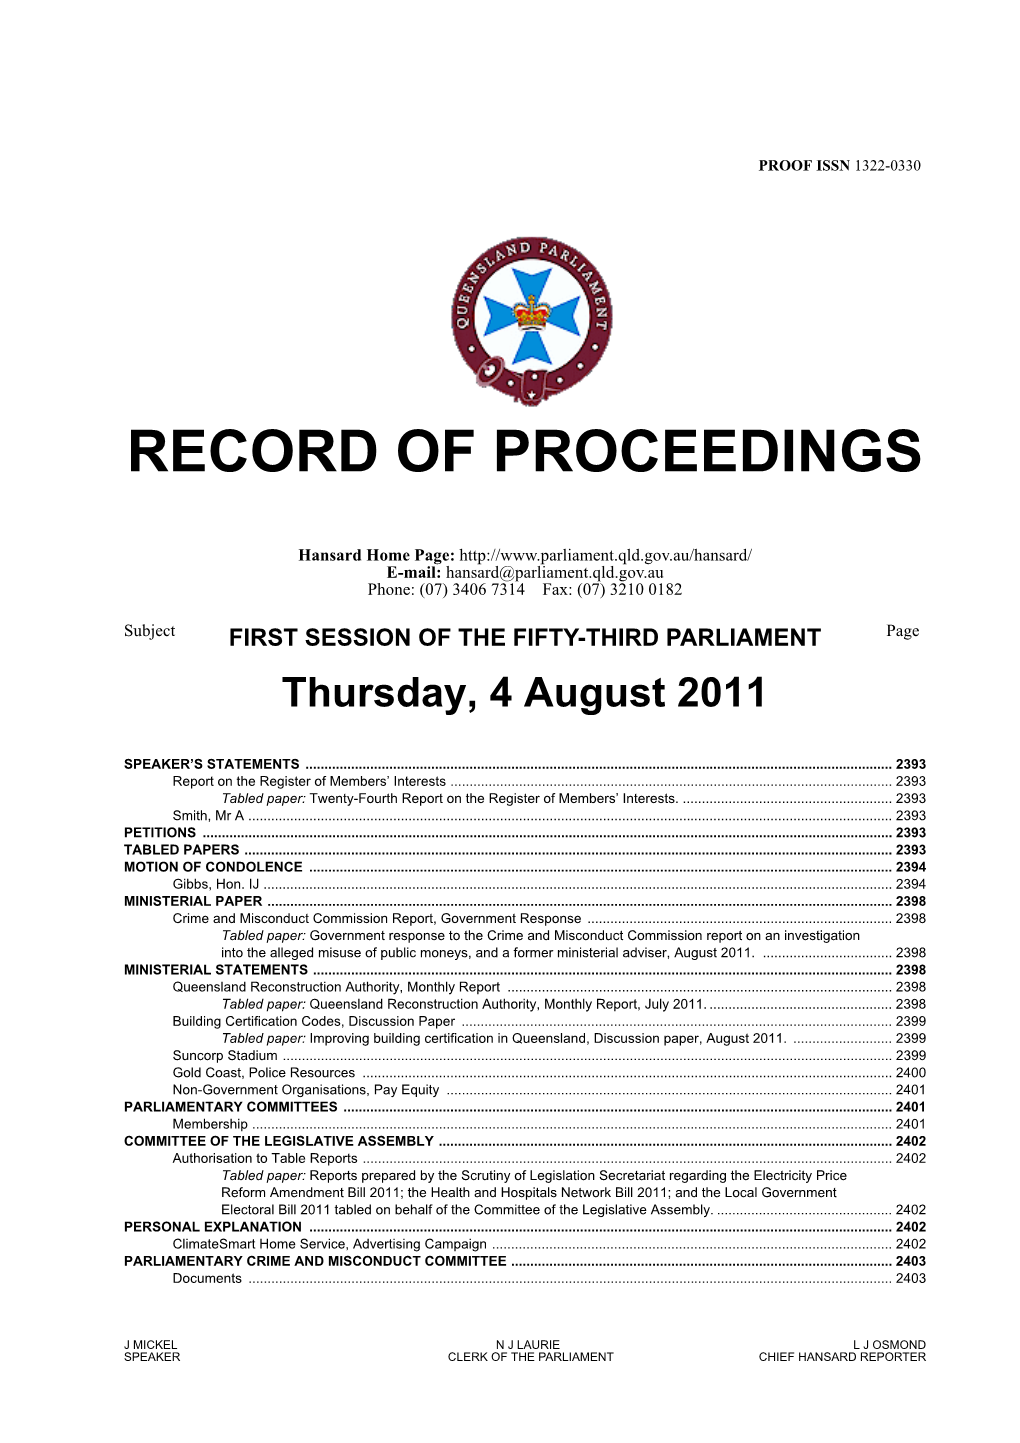 Record of Proceedings